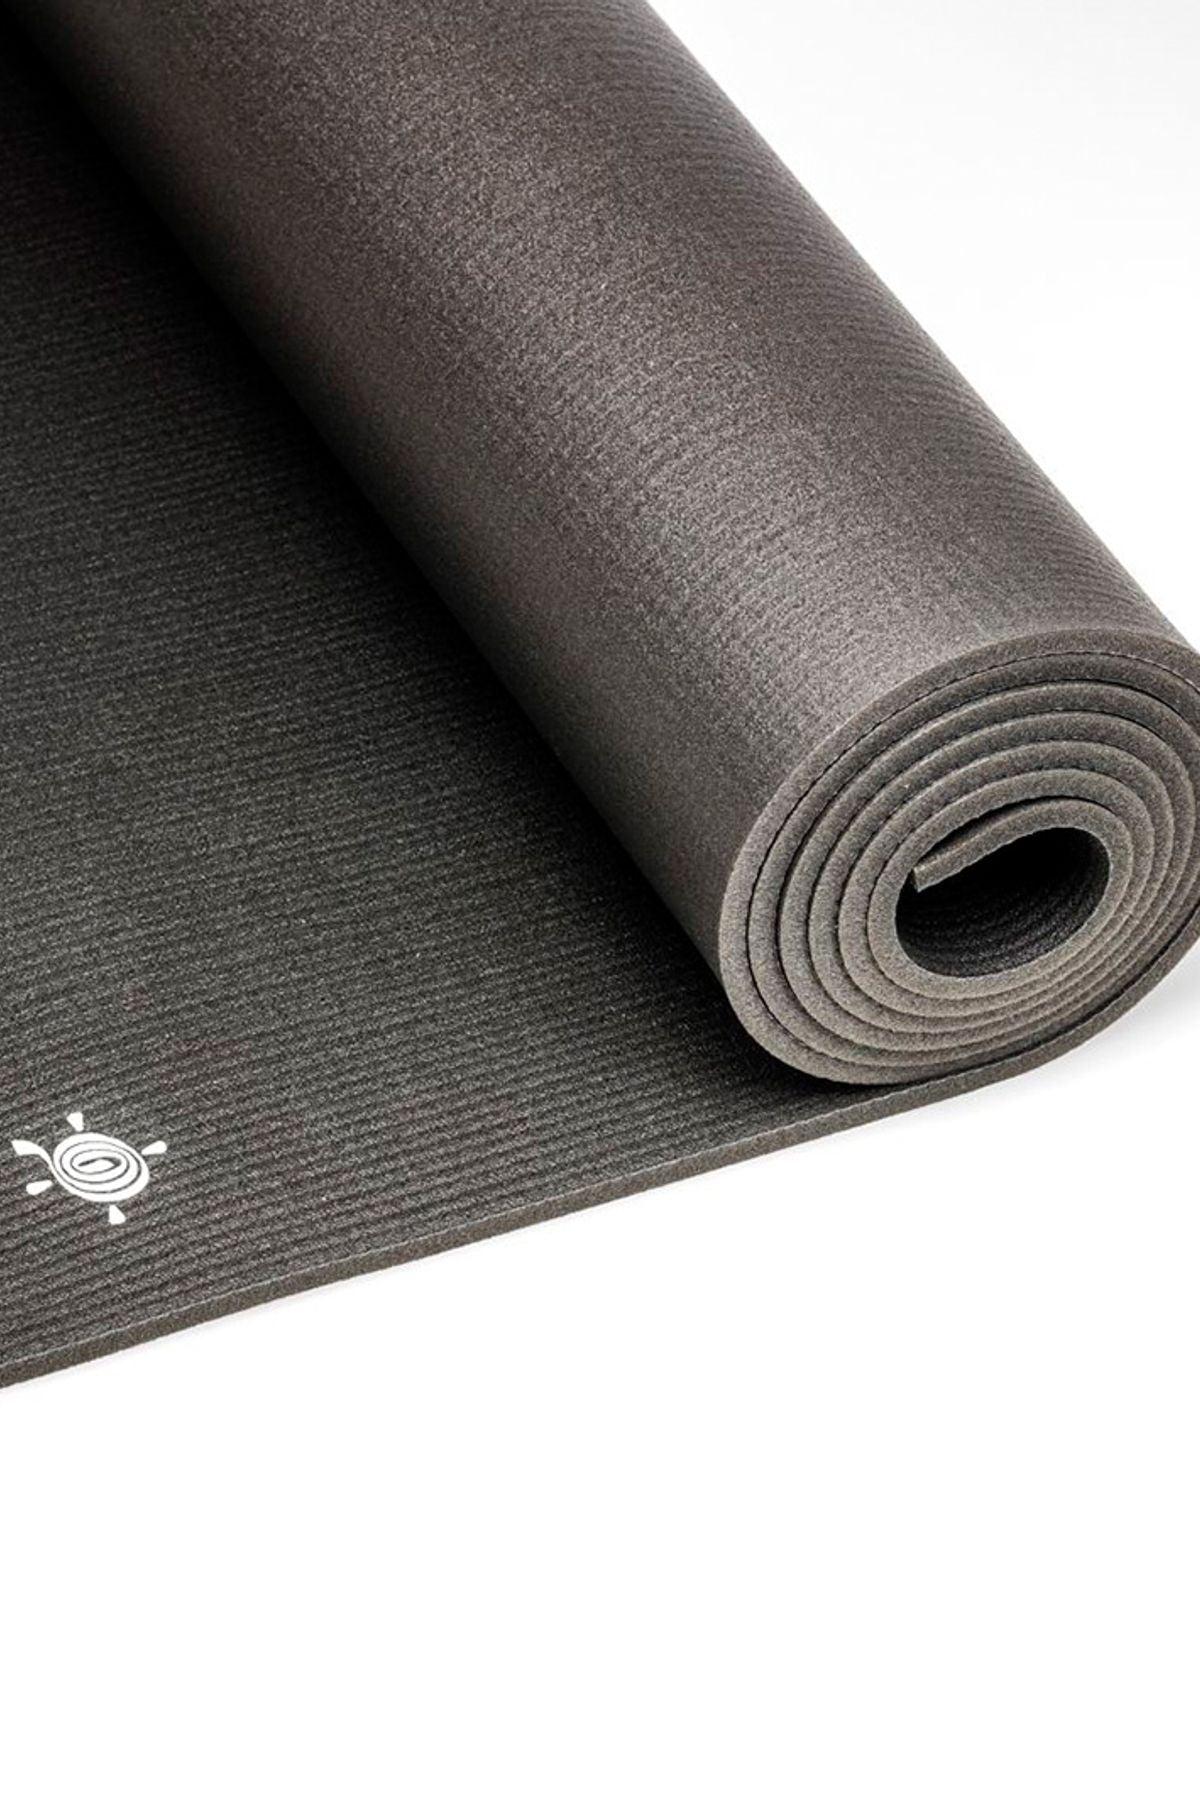 Kurma Color 6.4 mm Yoga Matı Siyah